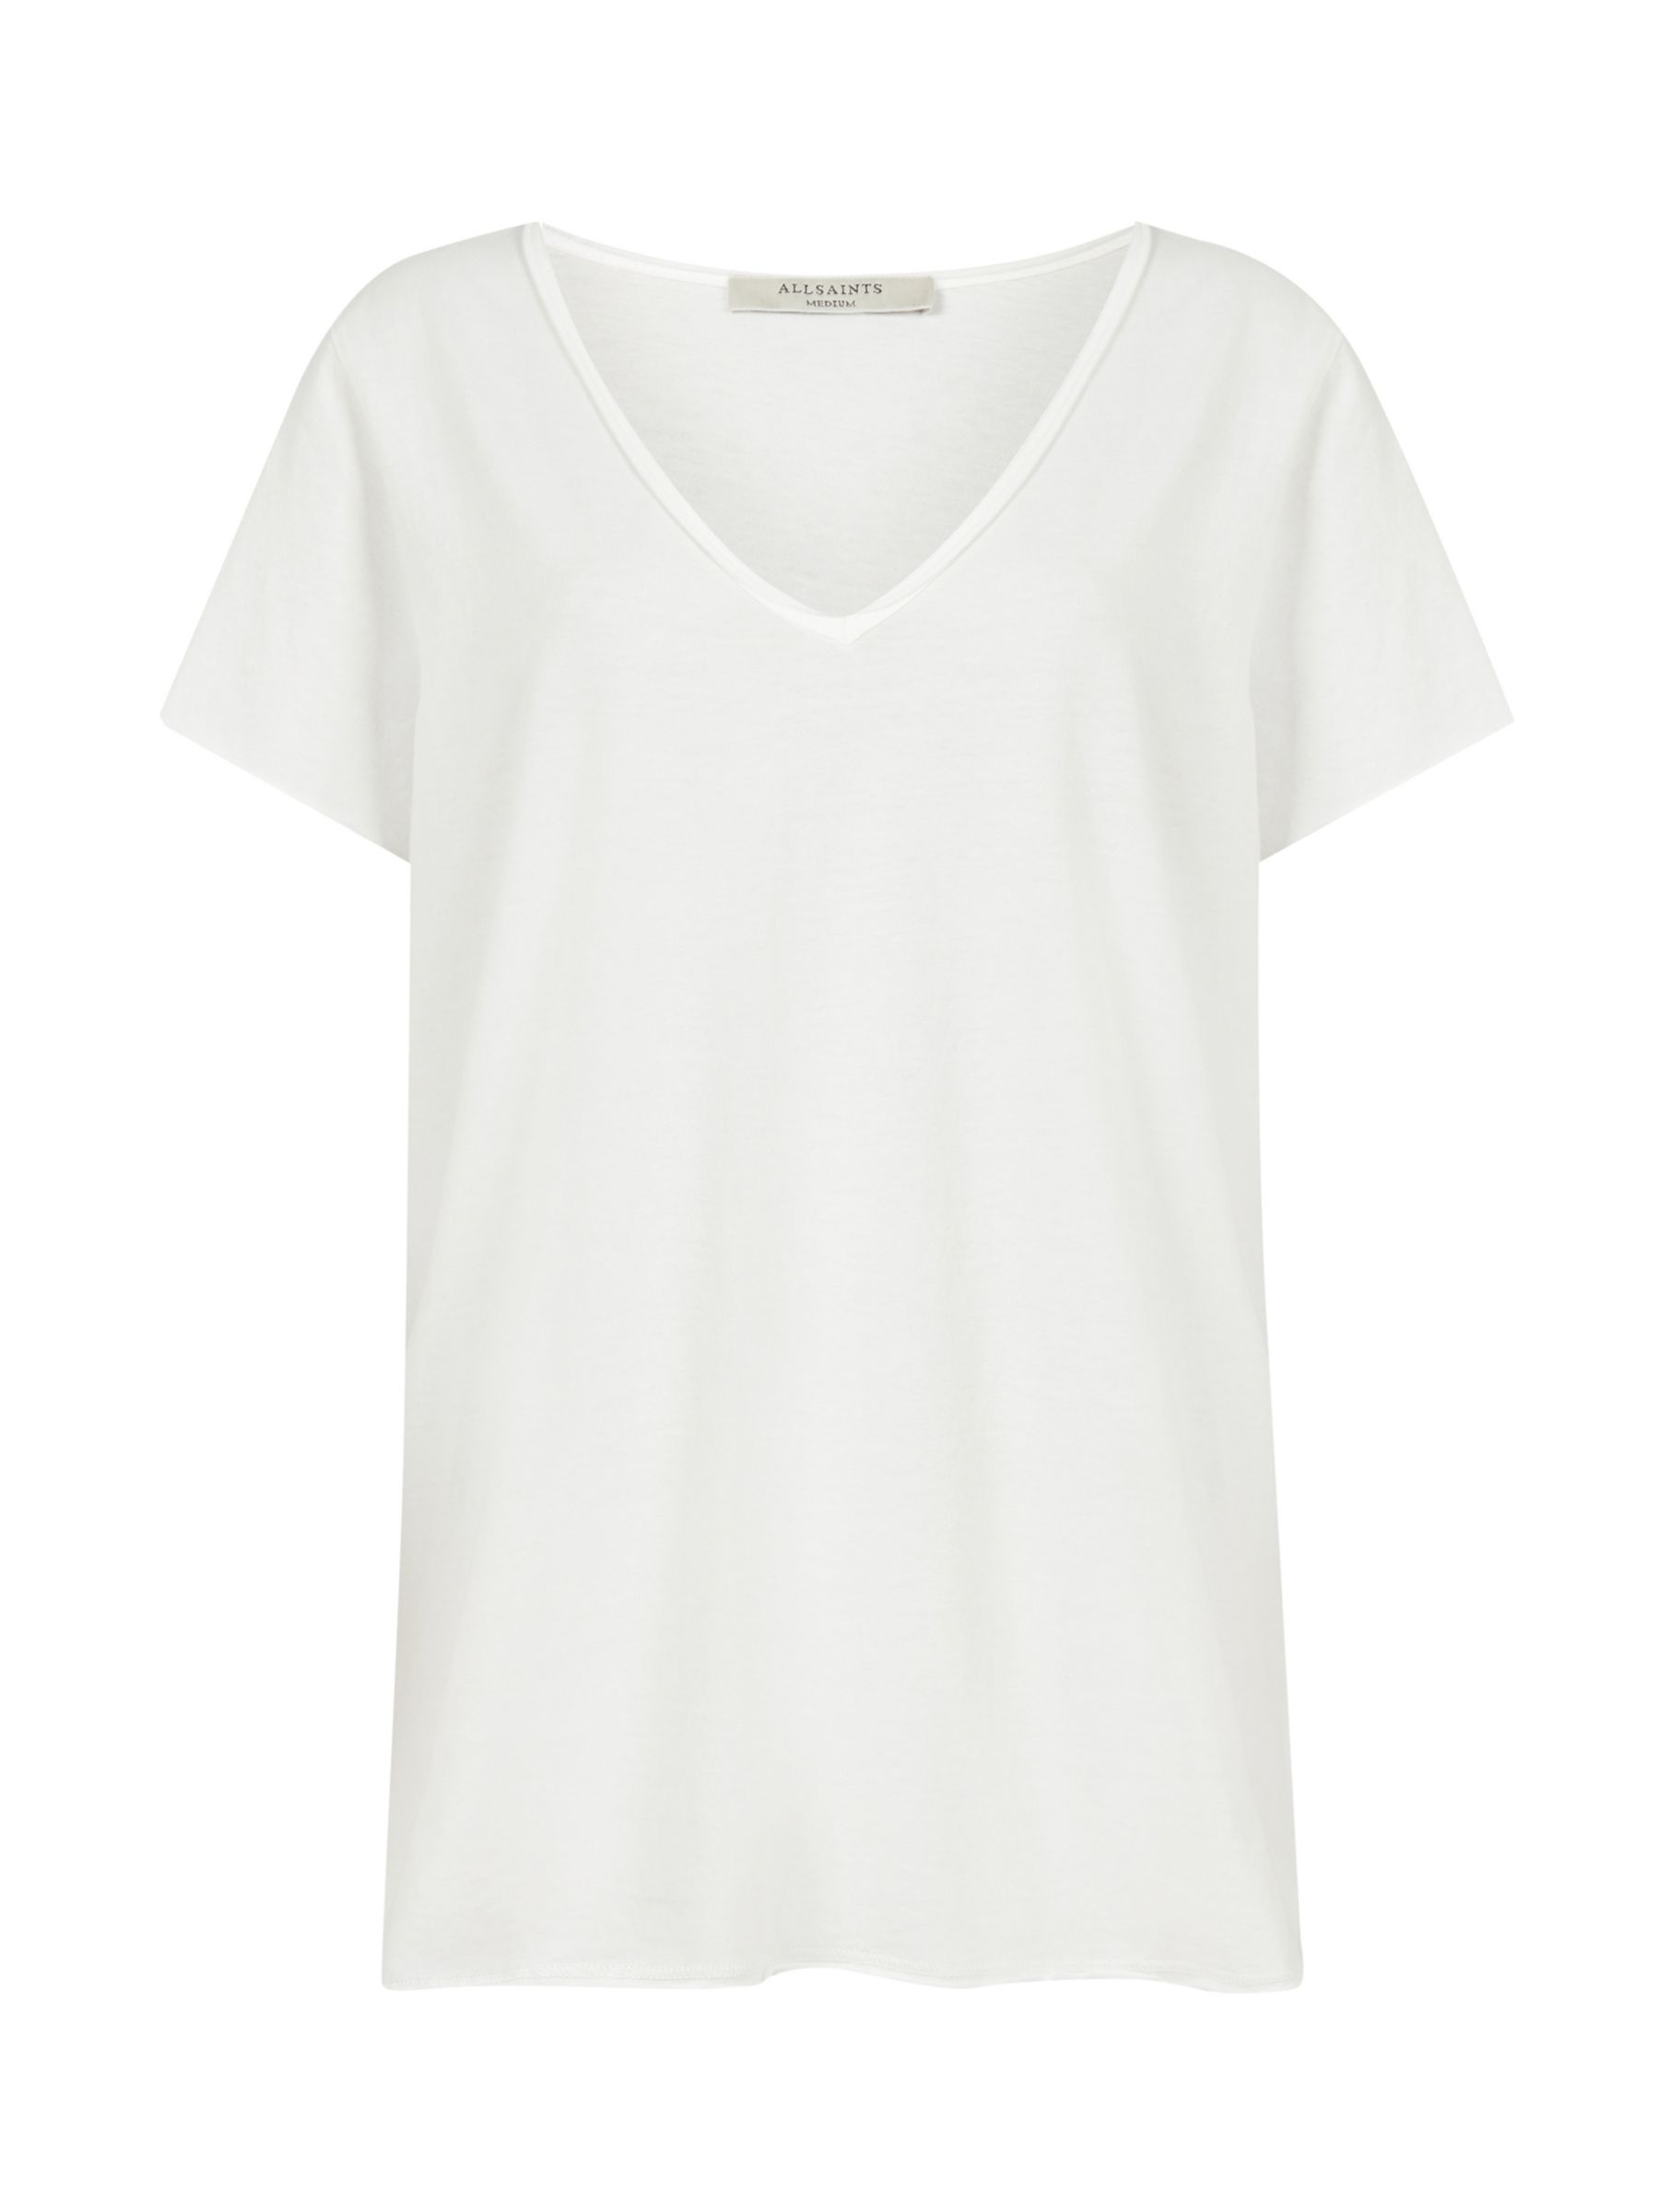 AllSaints Emelyn Tonic T-Shirt, Chalk White at John Lewis & Partners